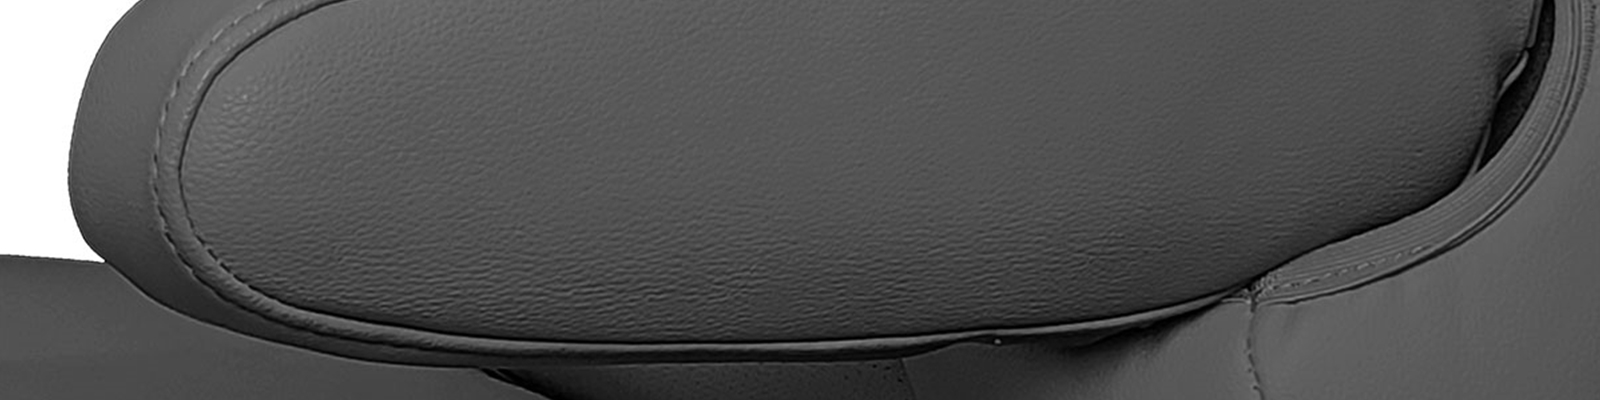 Ford Bronco Sport Auto Center Armrest Console Lid Cover